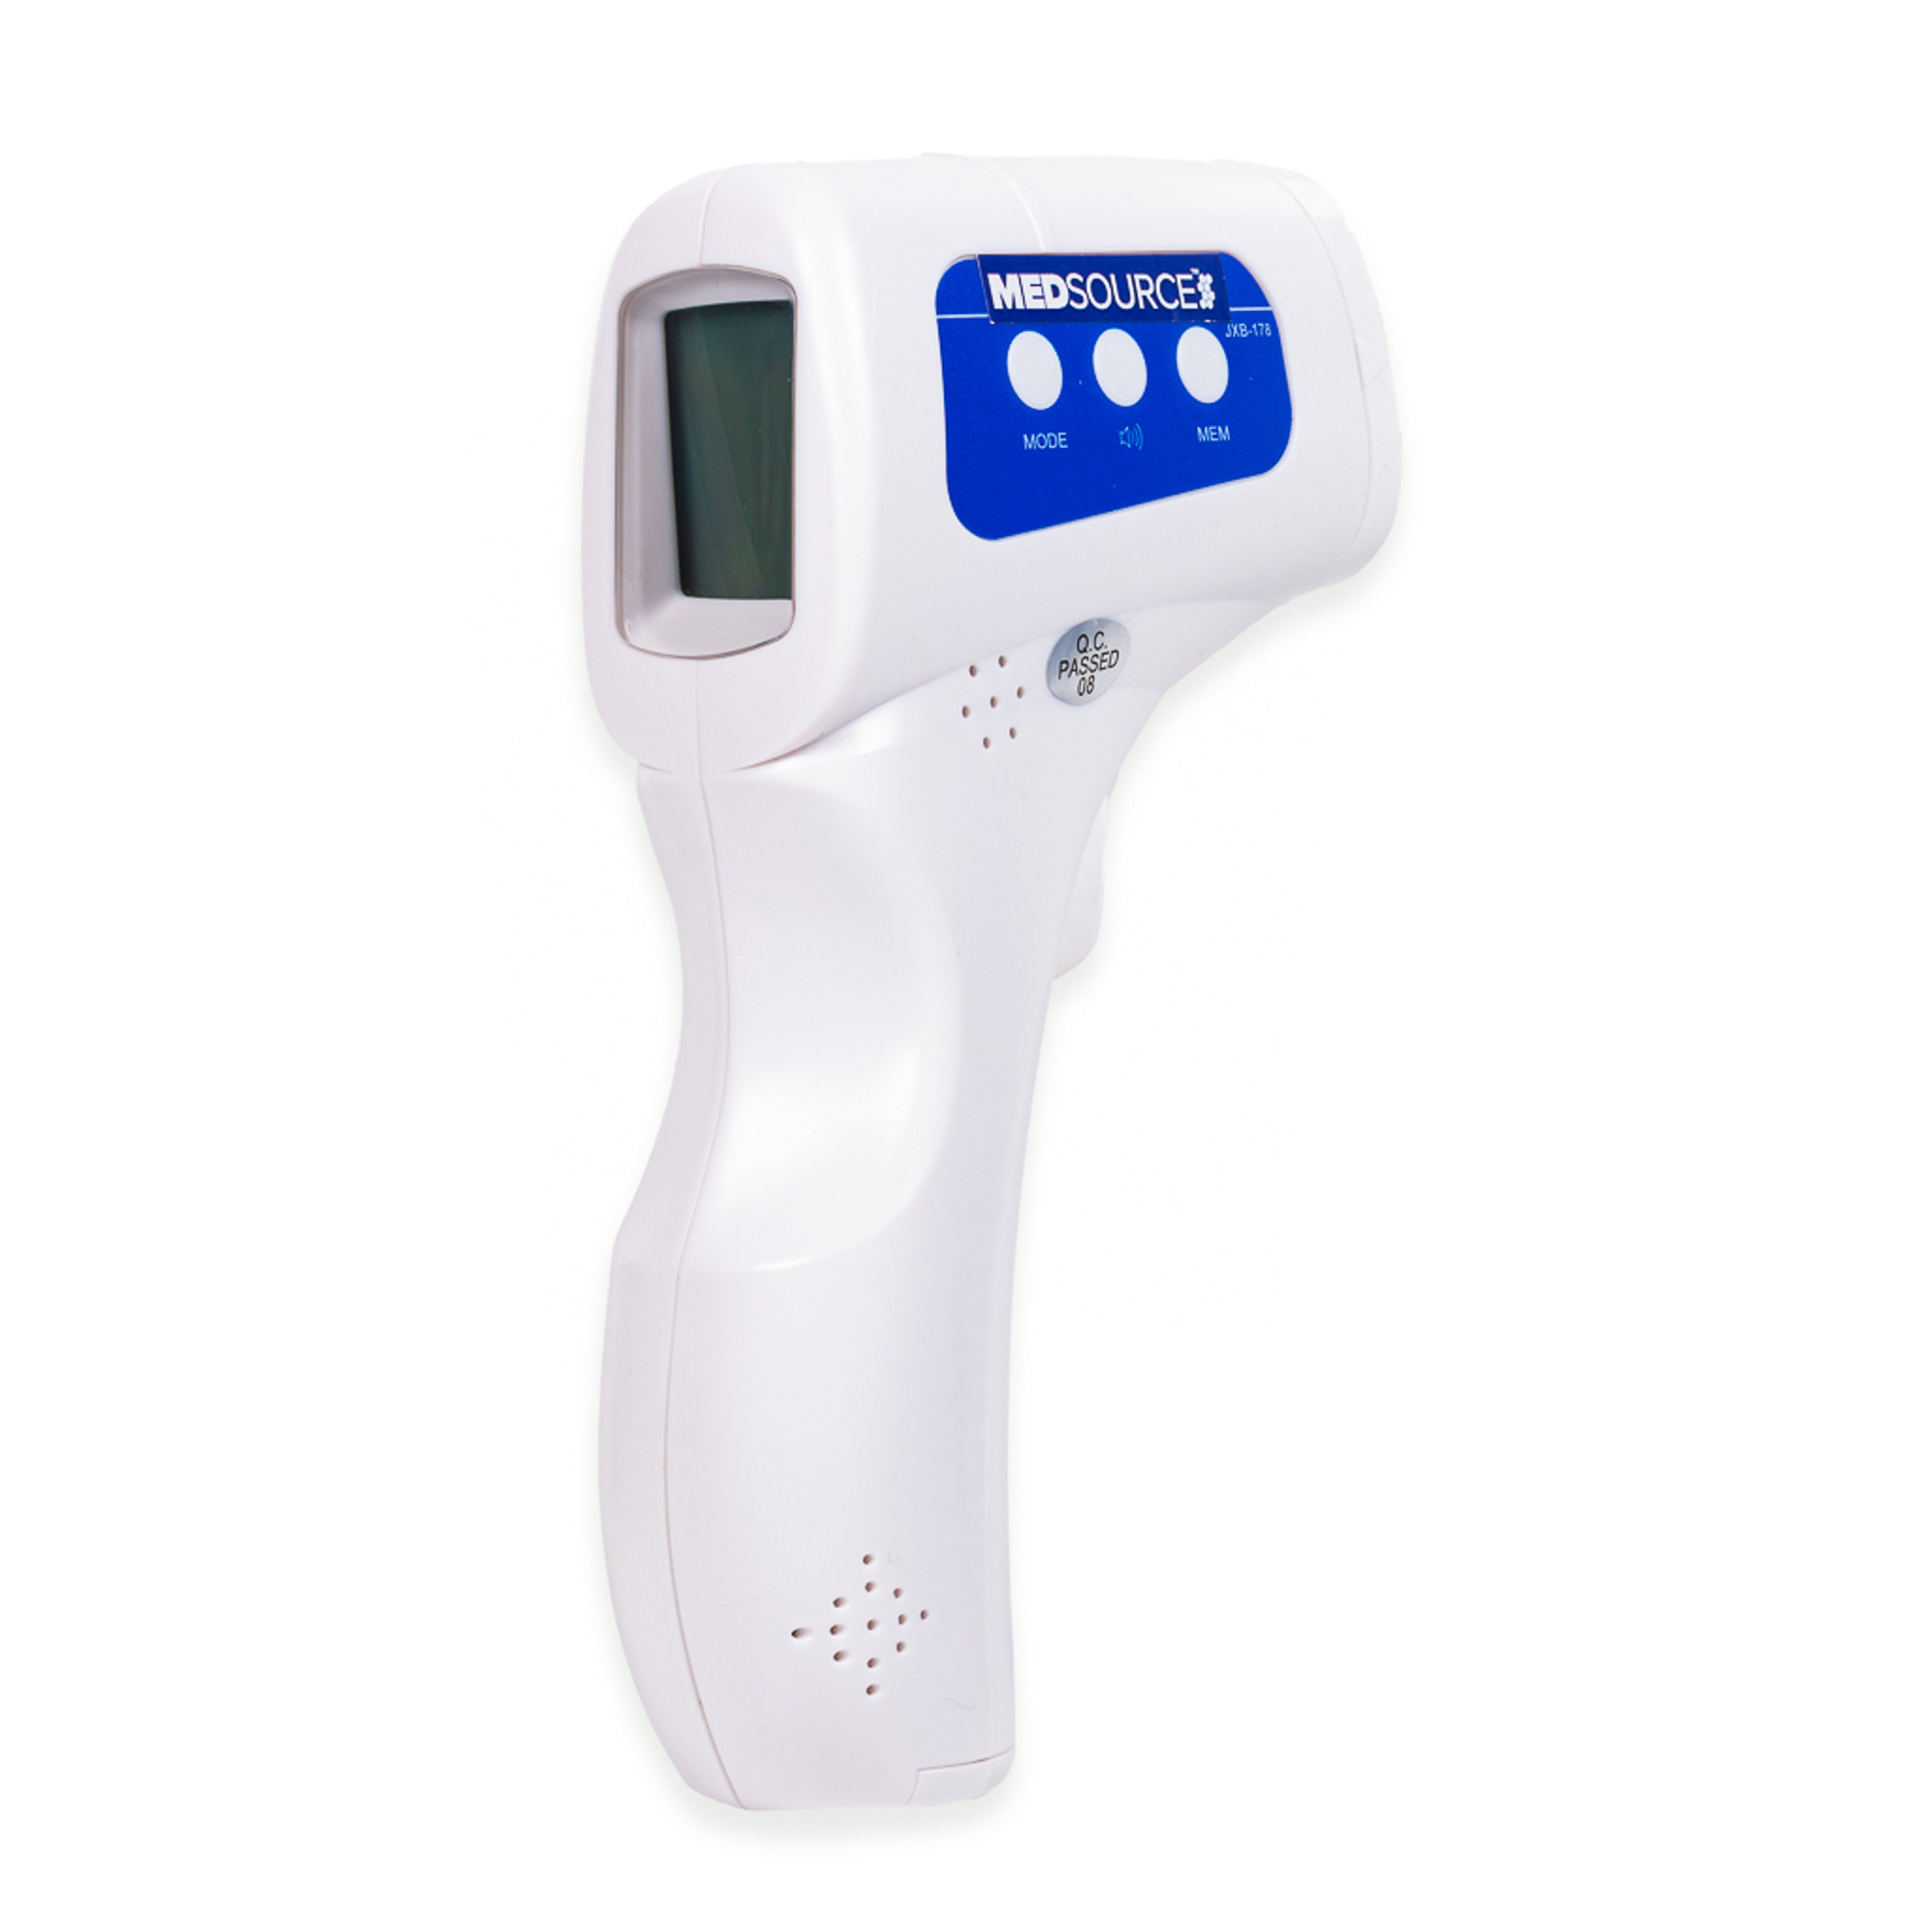 Non-contact infrared thermometer for convenient temperature measurement